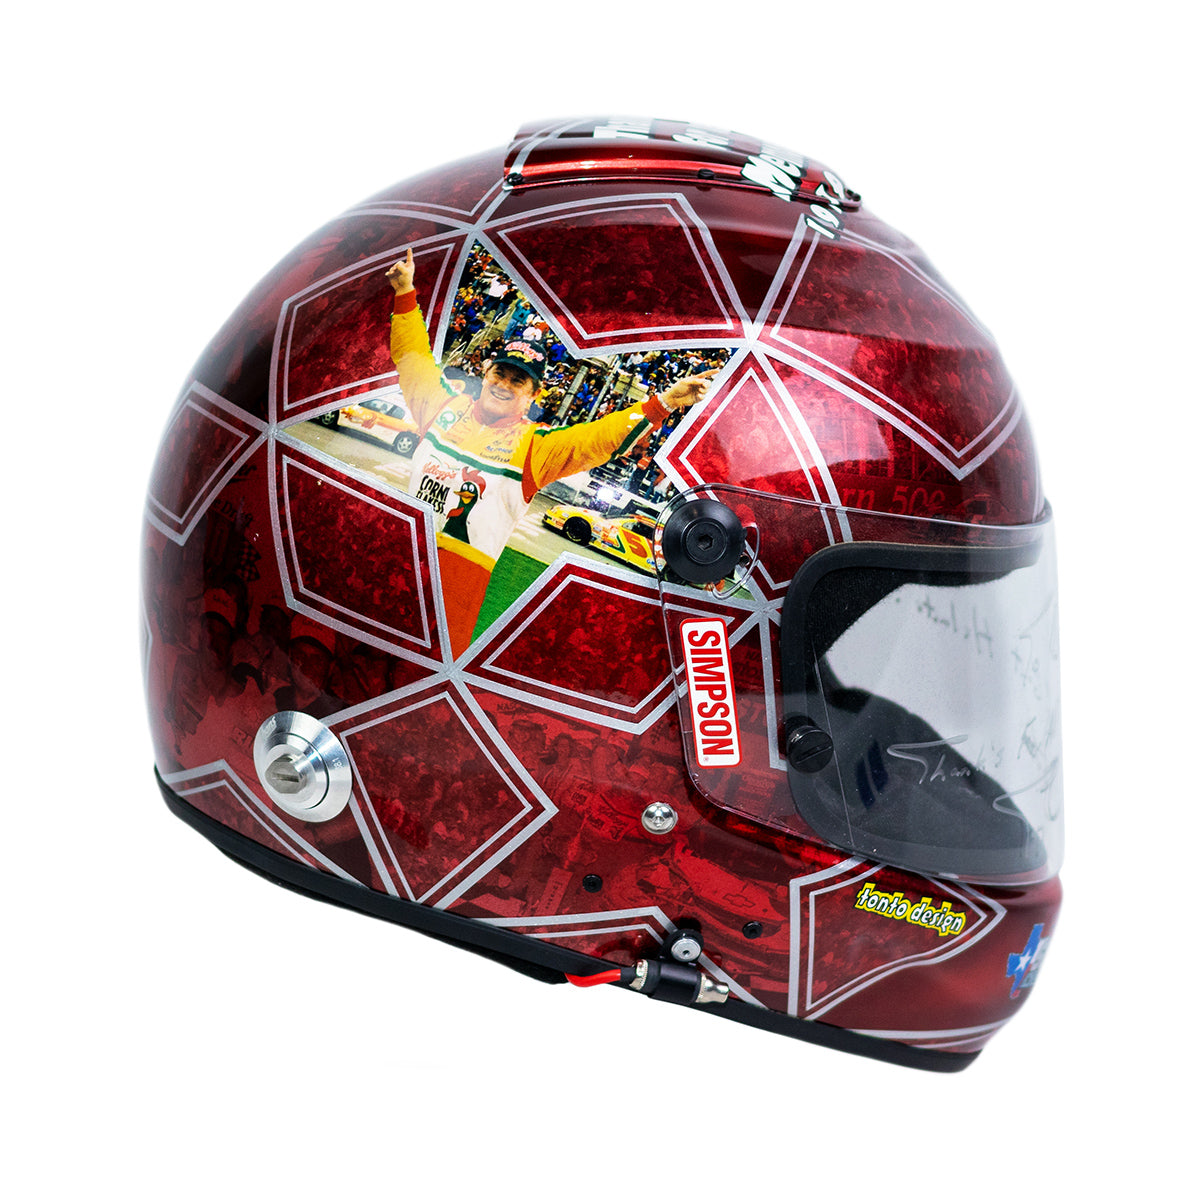 2006 Terry Labonte Signed 'Final Race' Used Hendrick Motorsports NASCAR Helmet